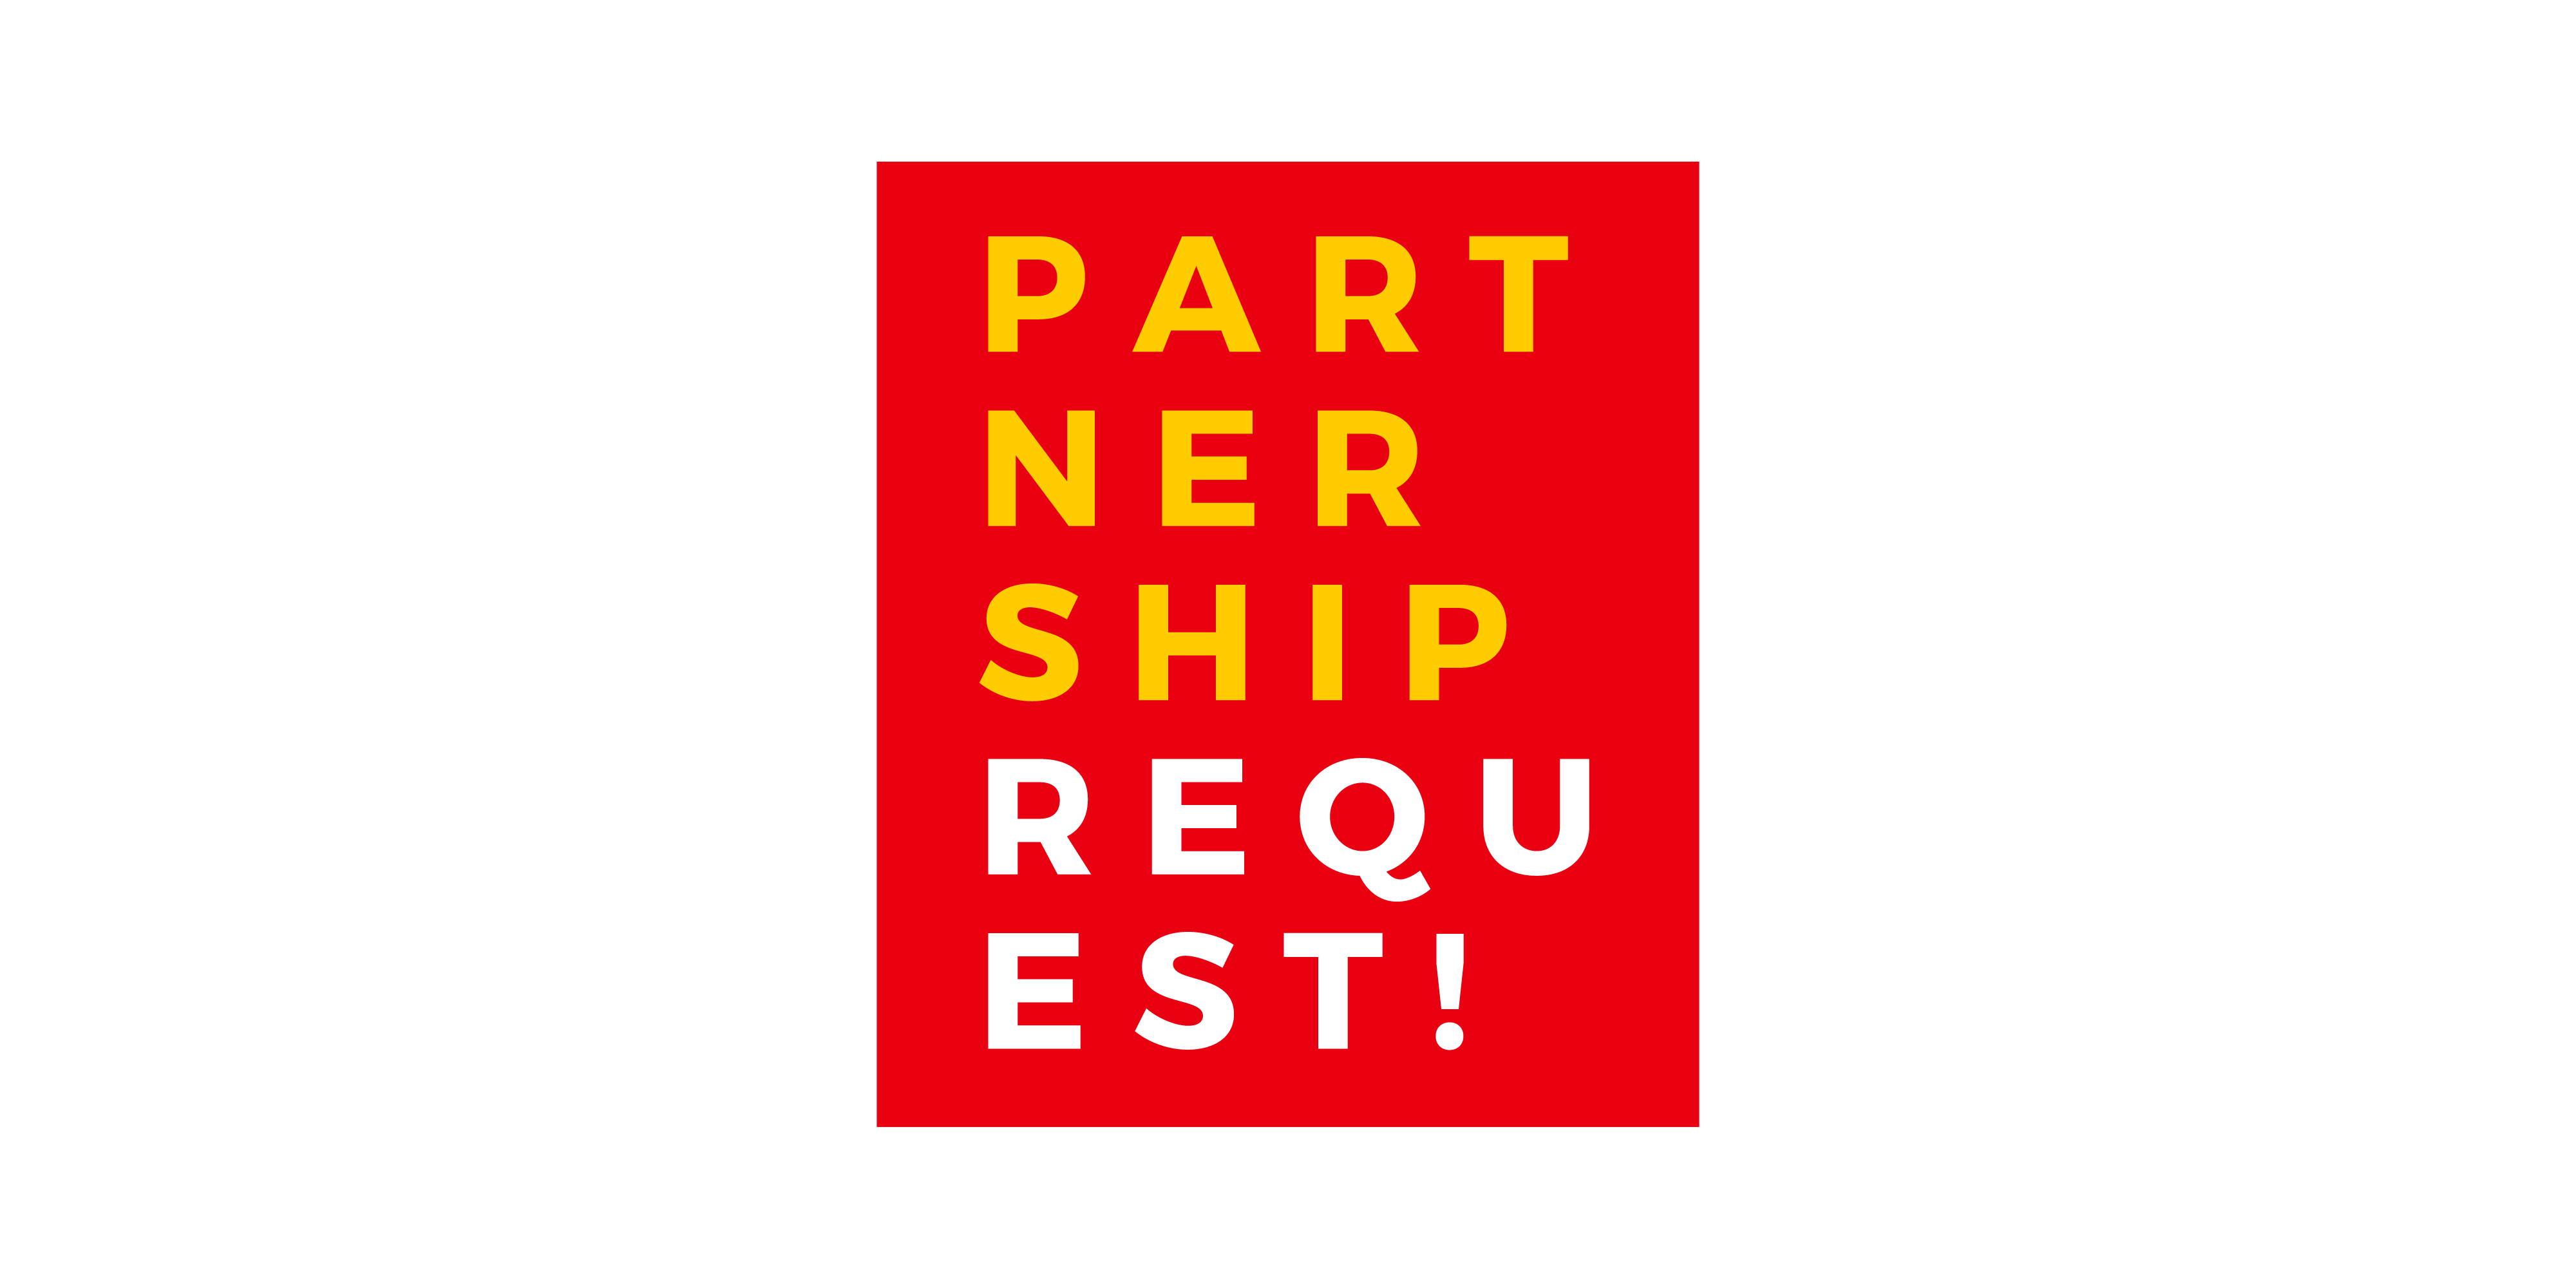 Partnership request